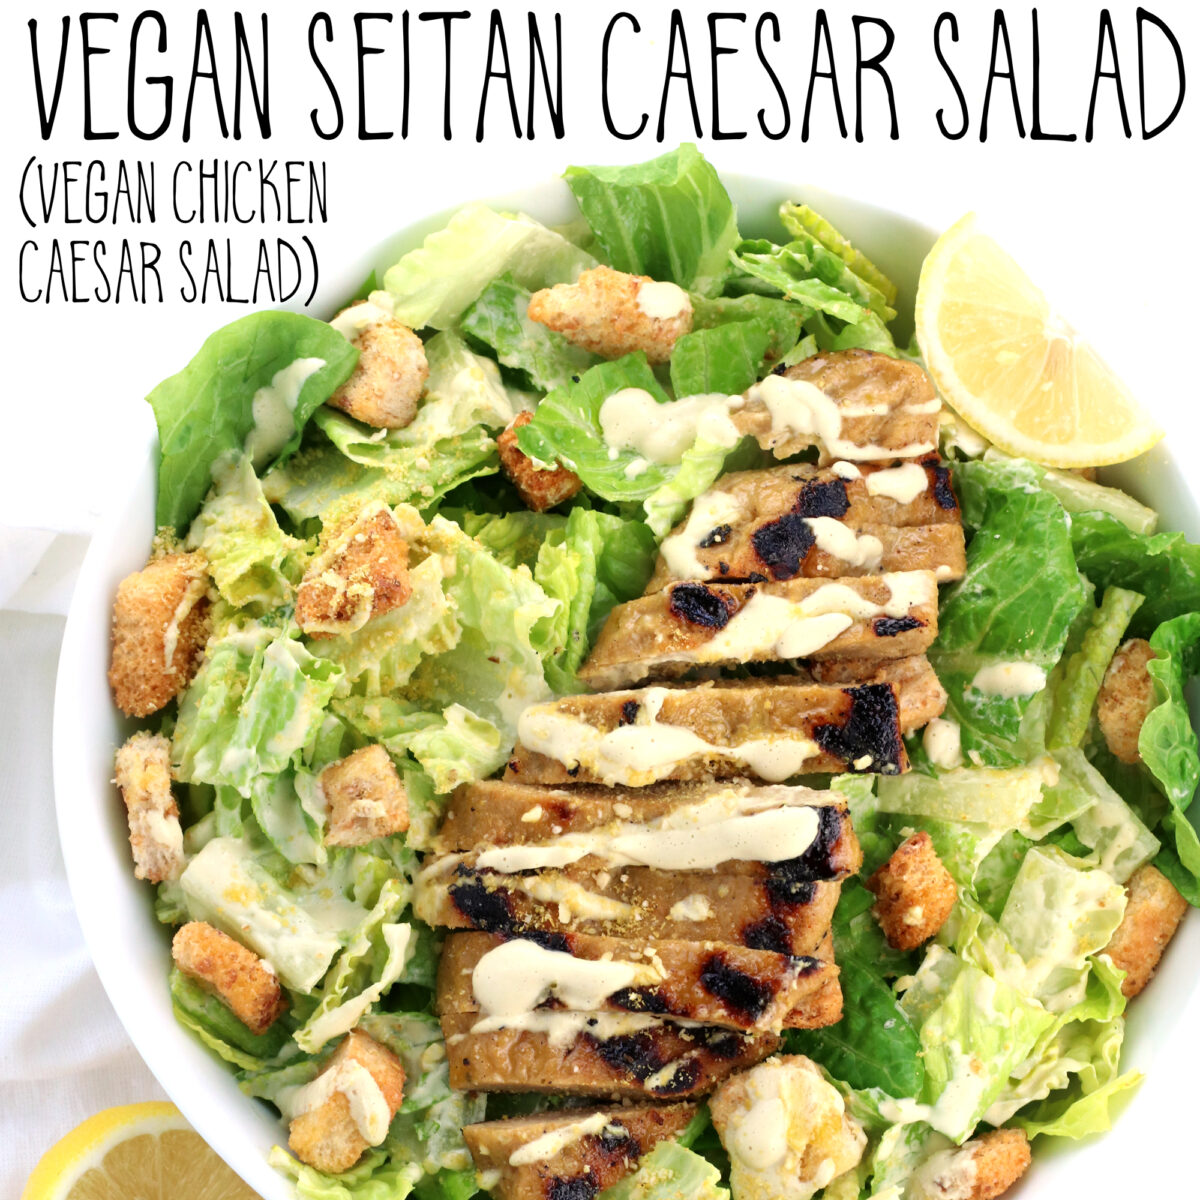 Vegan Seitan Caesar Salad (Vegan Chicken Caesar Salad)